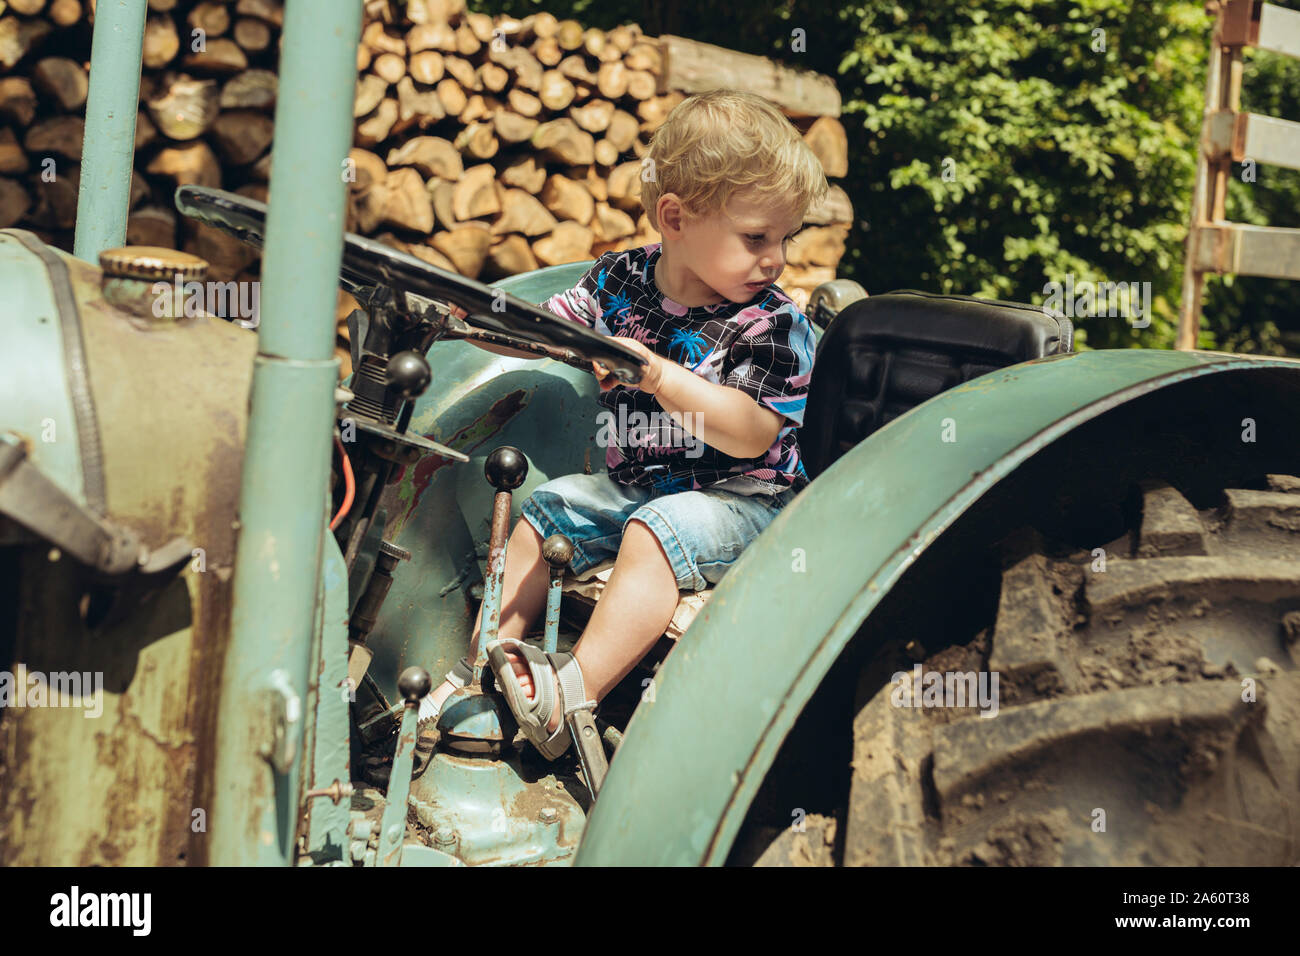 Petit garçon semblant de conduire un tracteur Banque D'Images